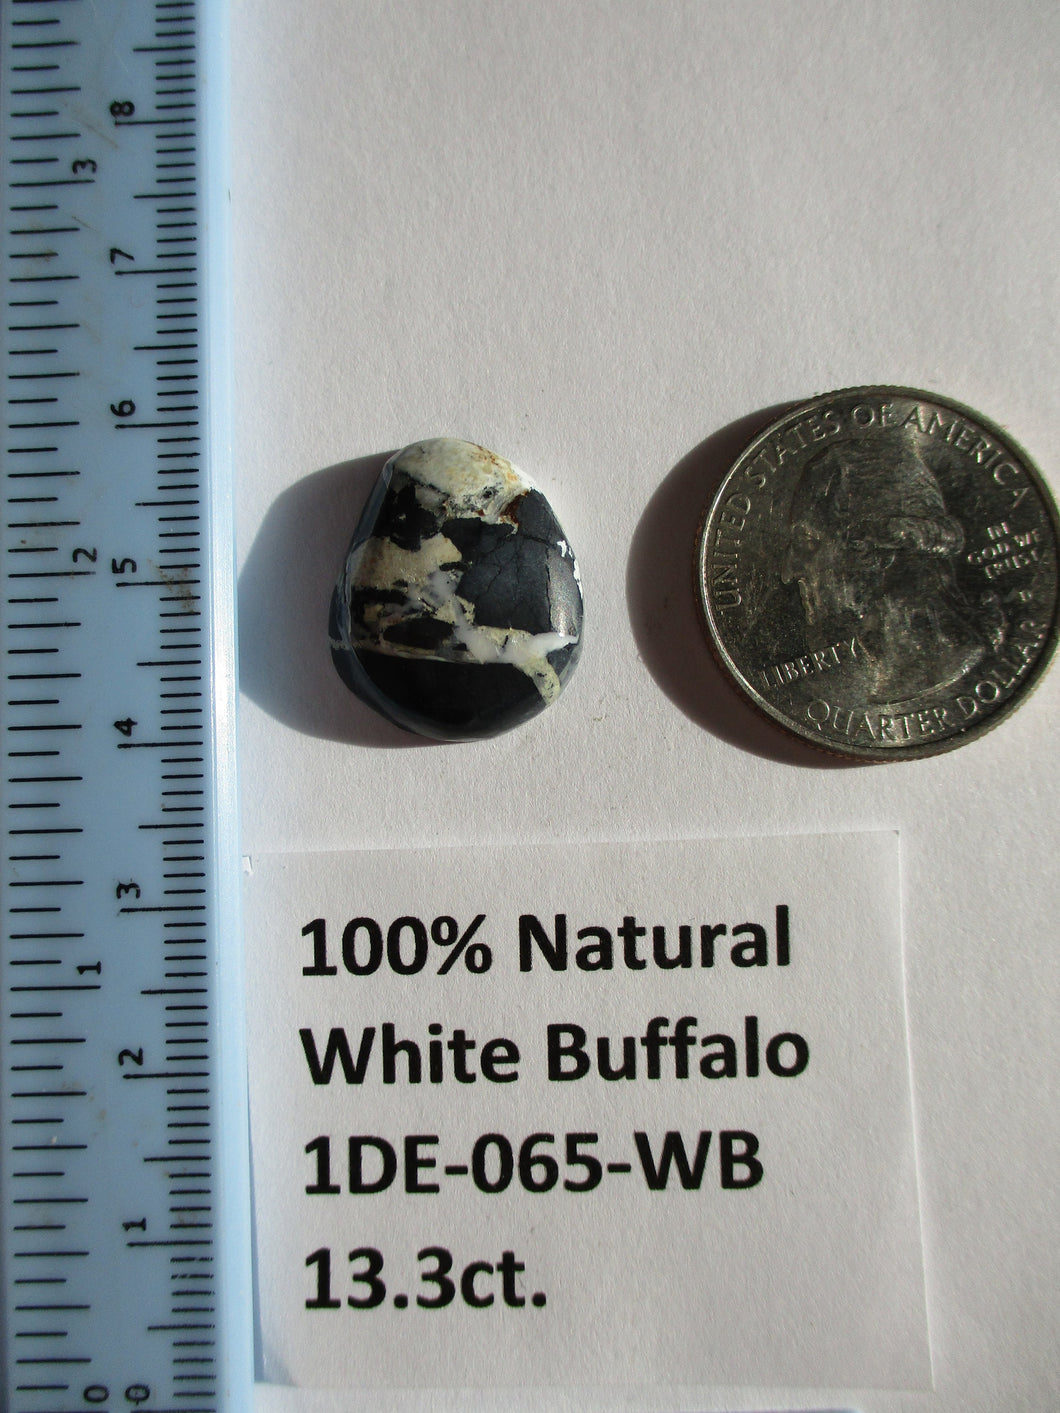 13.3 ct. (19x16x5 mm) 100% Natural White Buffalo Cabochon Gemstone 1DE 065